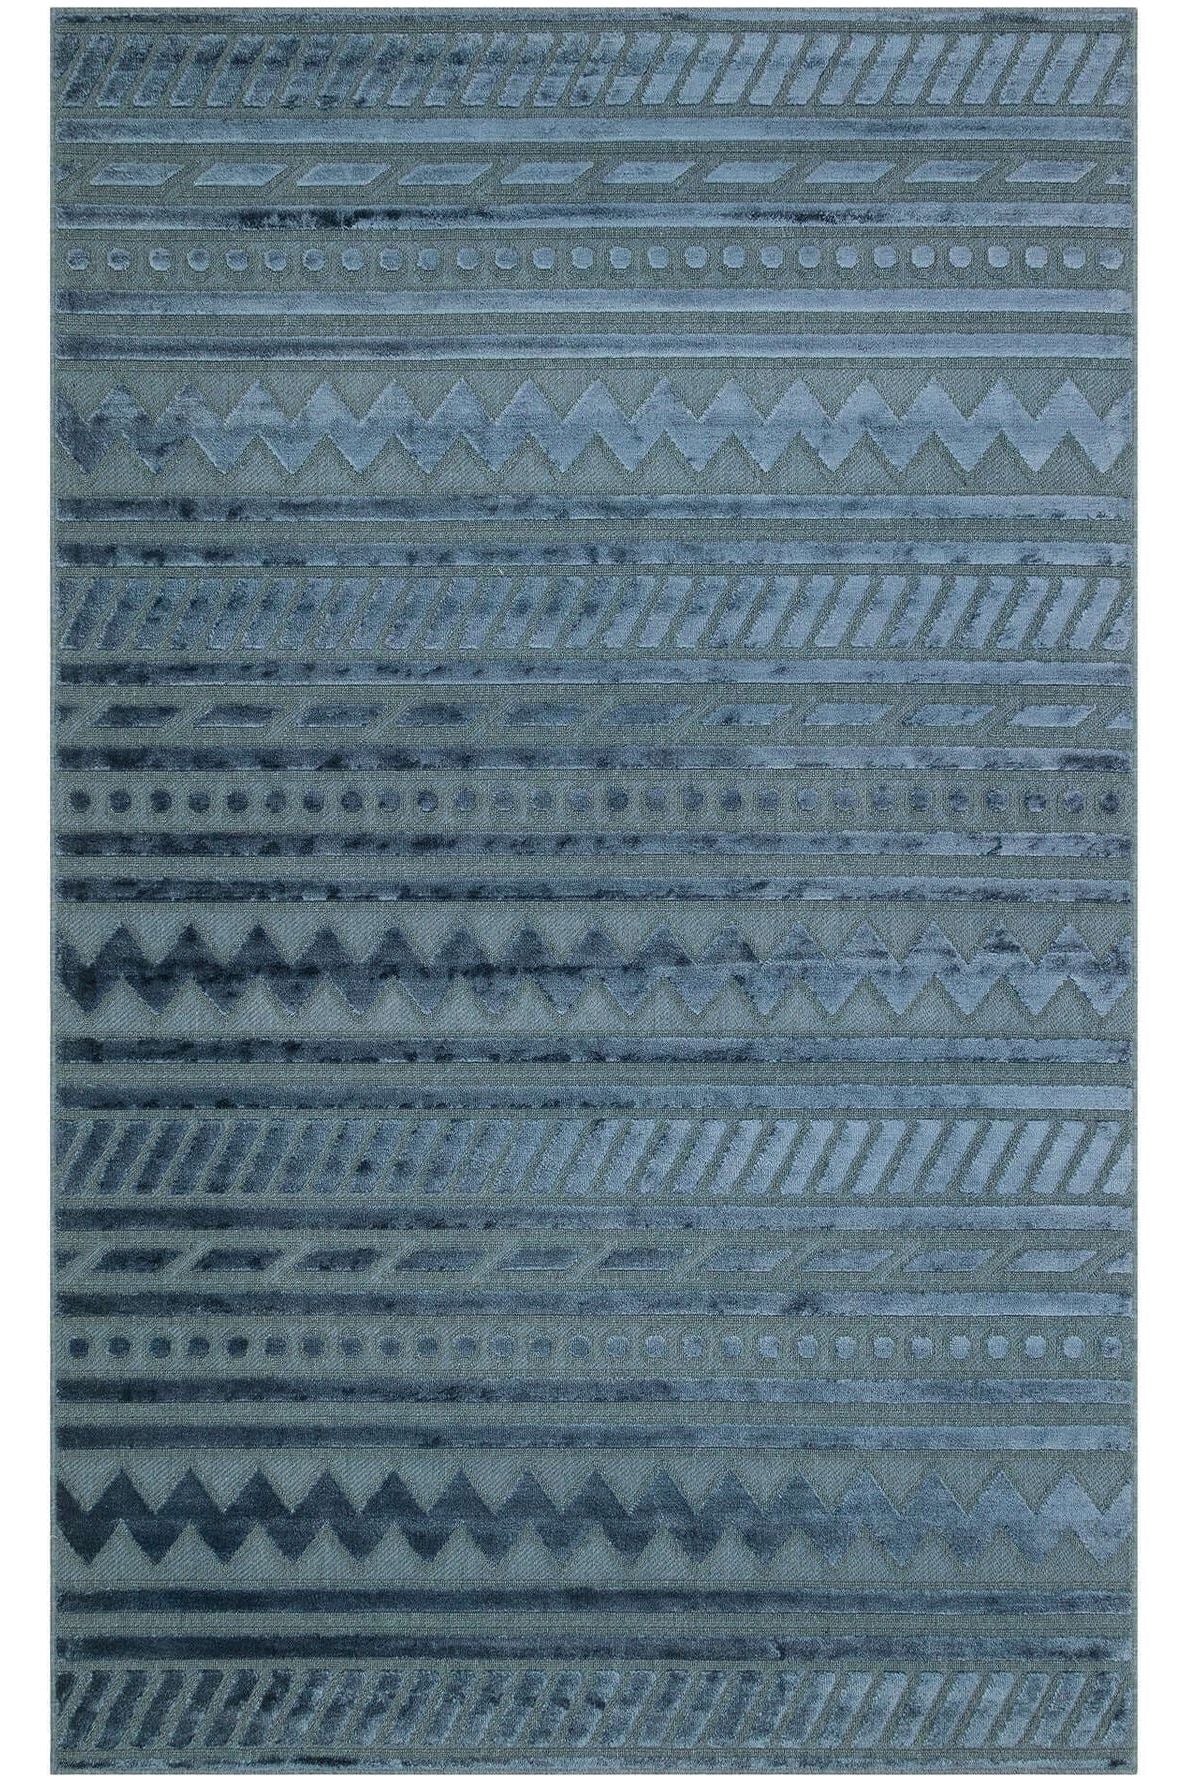 #Turkish_Carpets_Rugs# #Modern_Carpets# #Abrash_Carpets#Znt 06 Navy Dyed